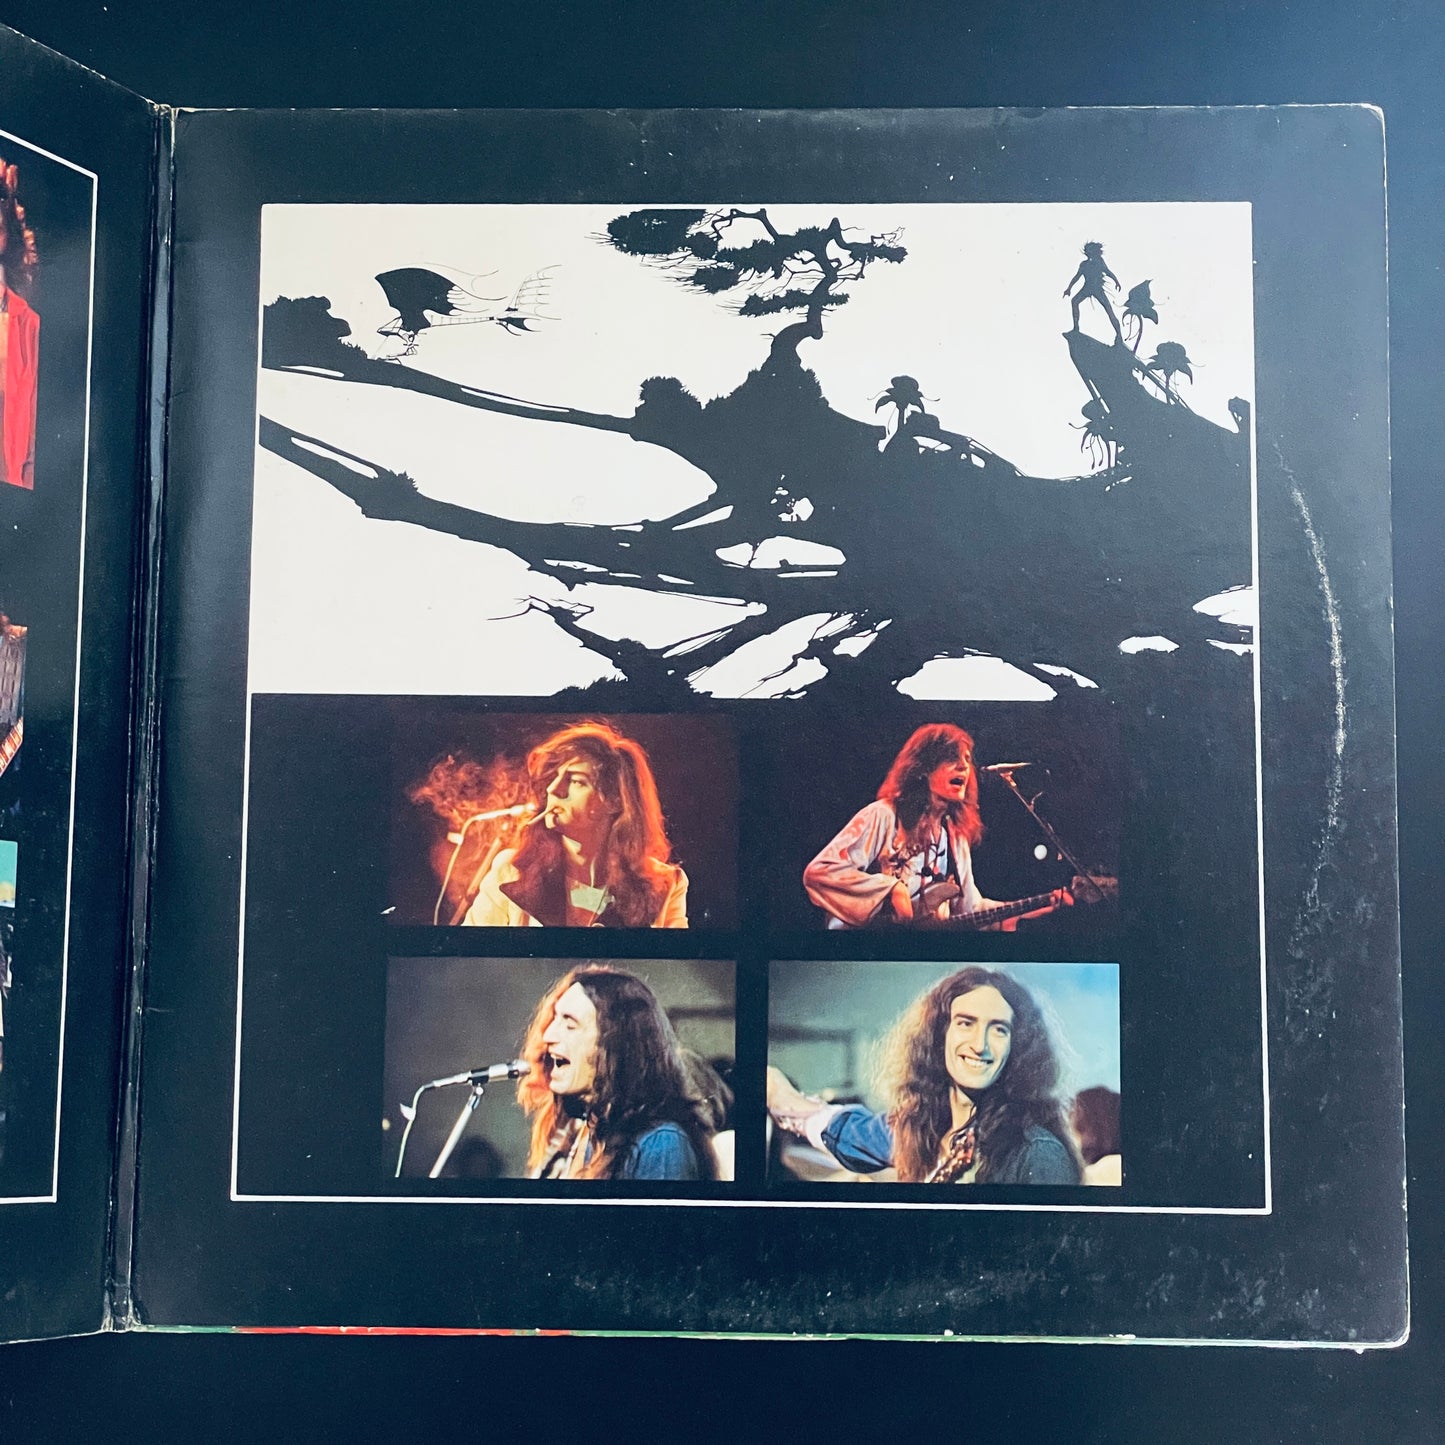 Uriah Heep - The Magician's Birthday original LP (used)